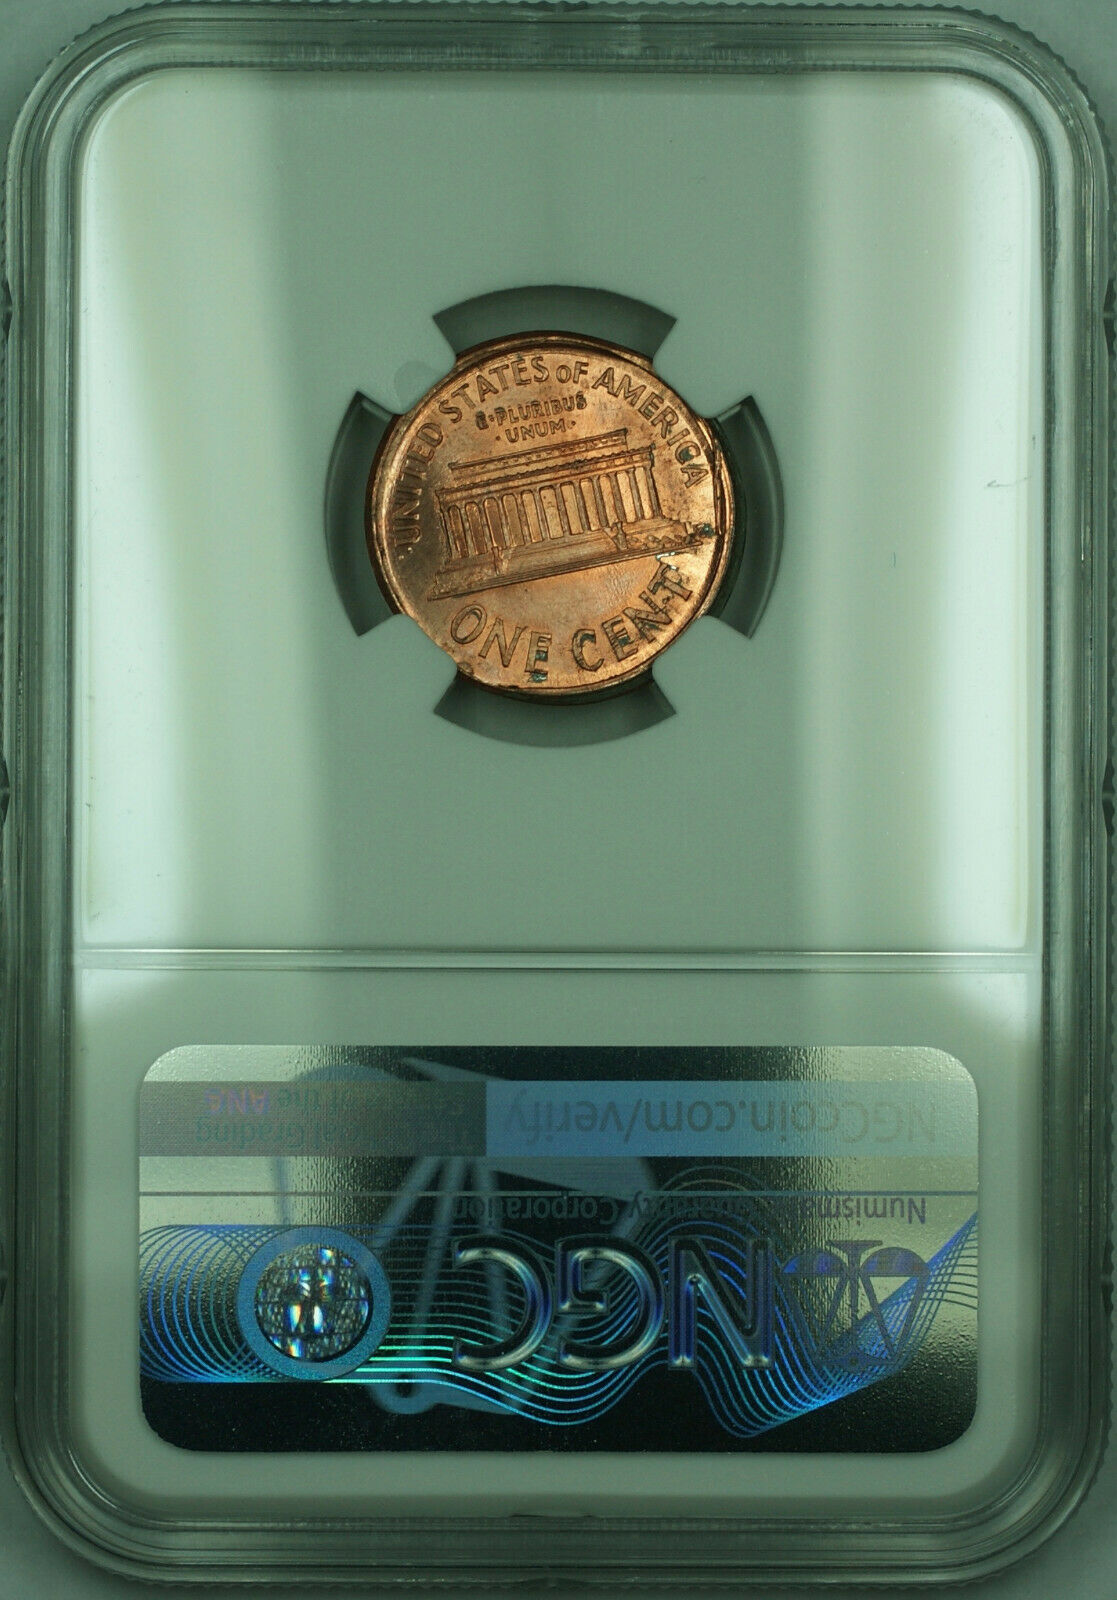 USA Lincoln Cent *MULTI STRUCK w/OBV STRUCK THRU CAPPED DIE* Mint 